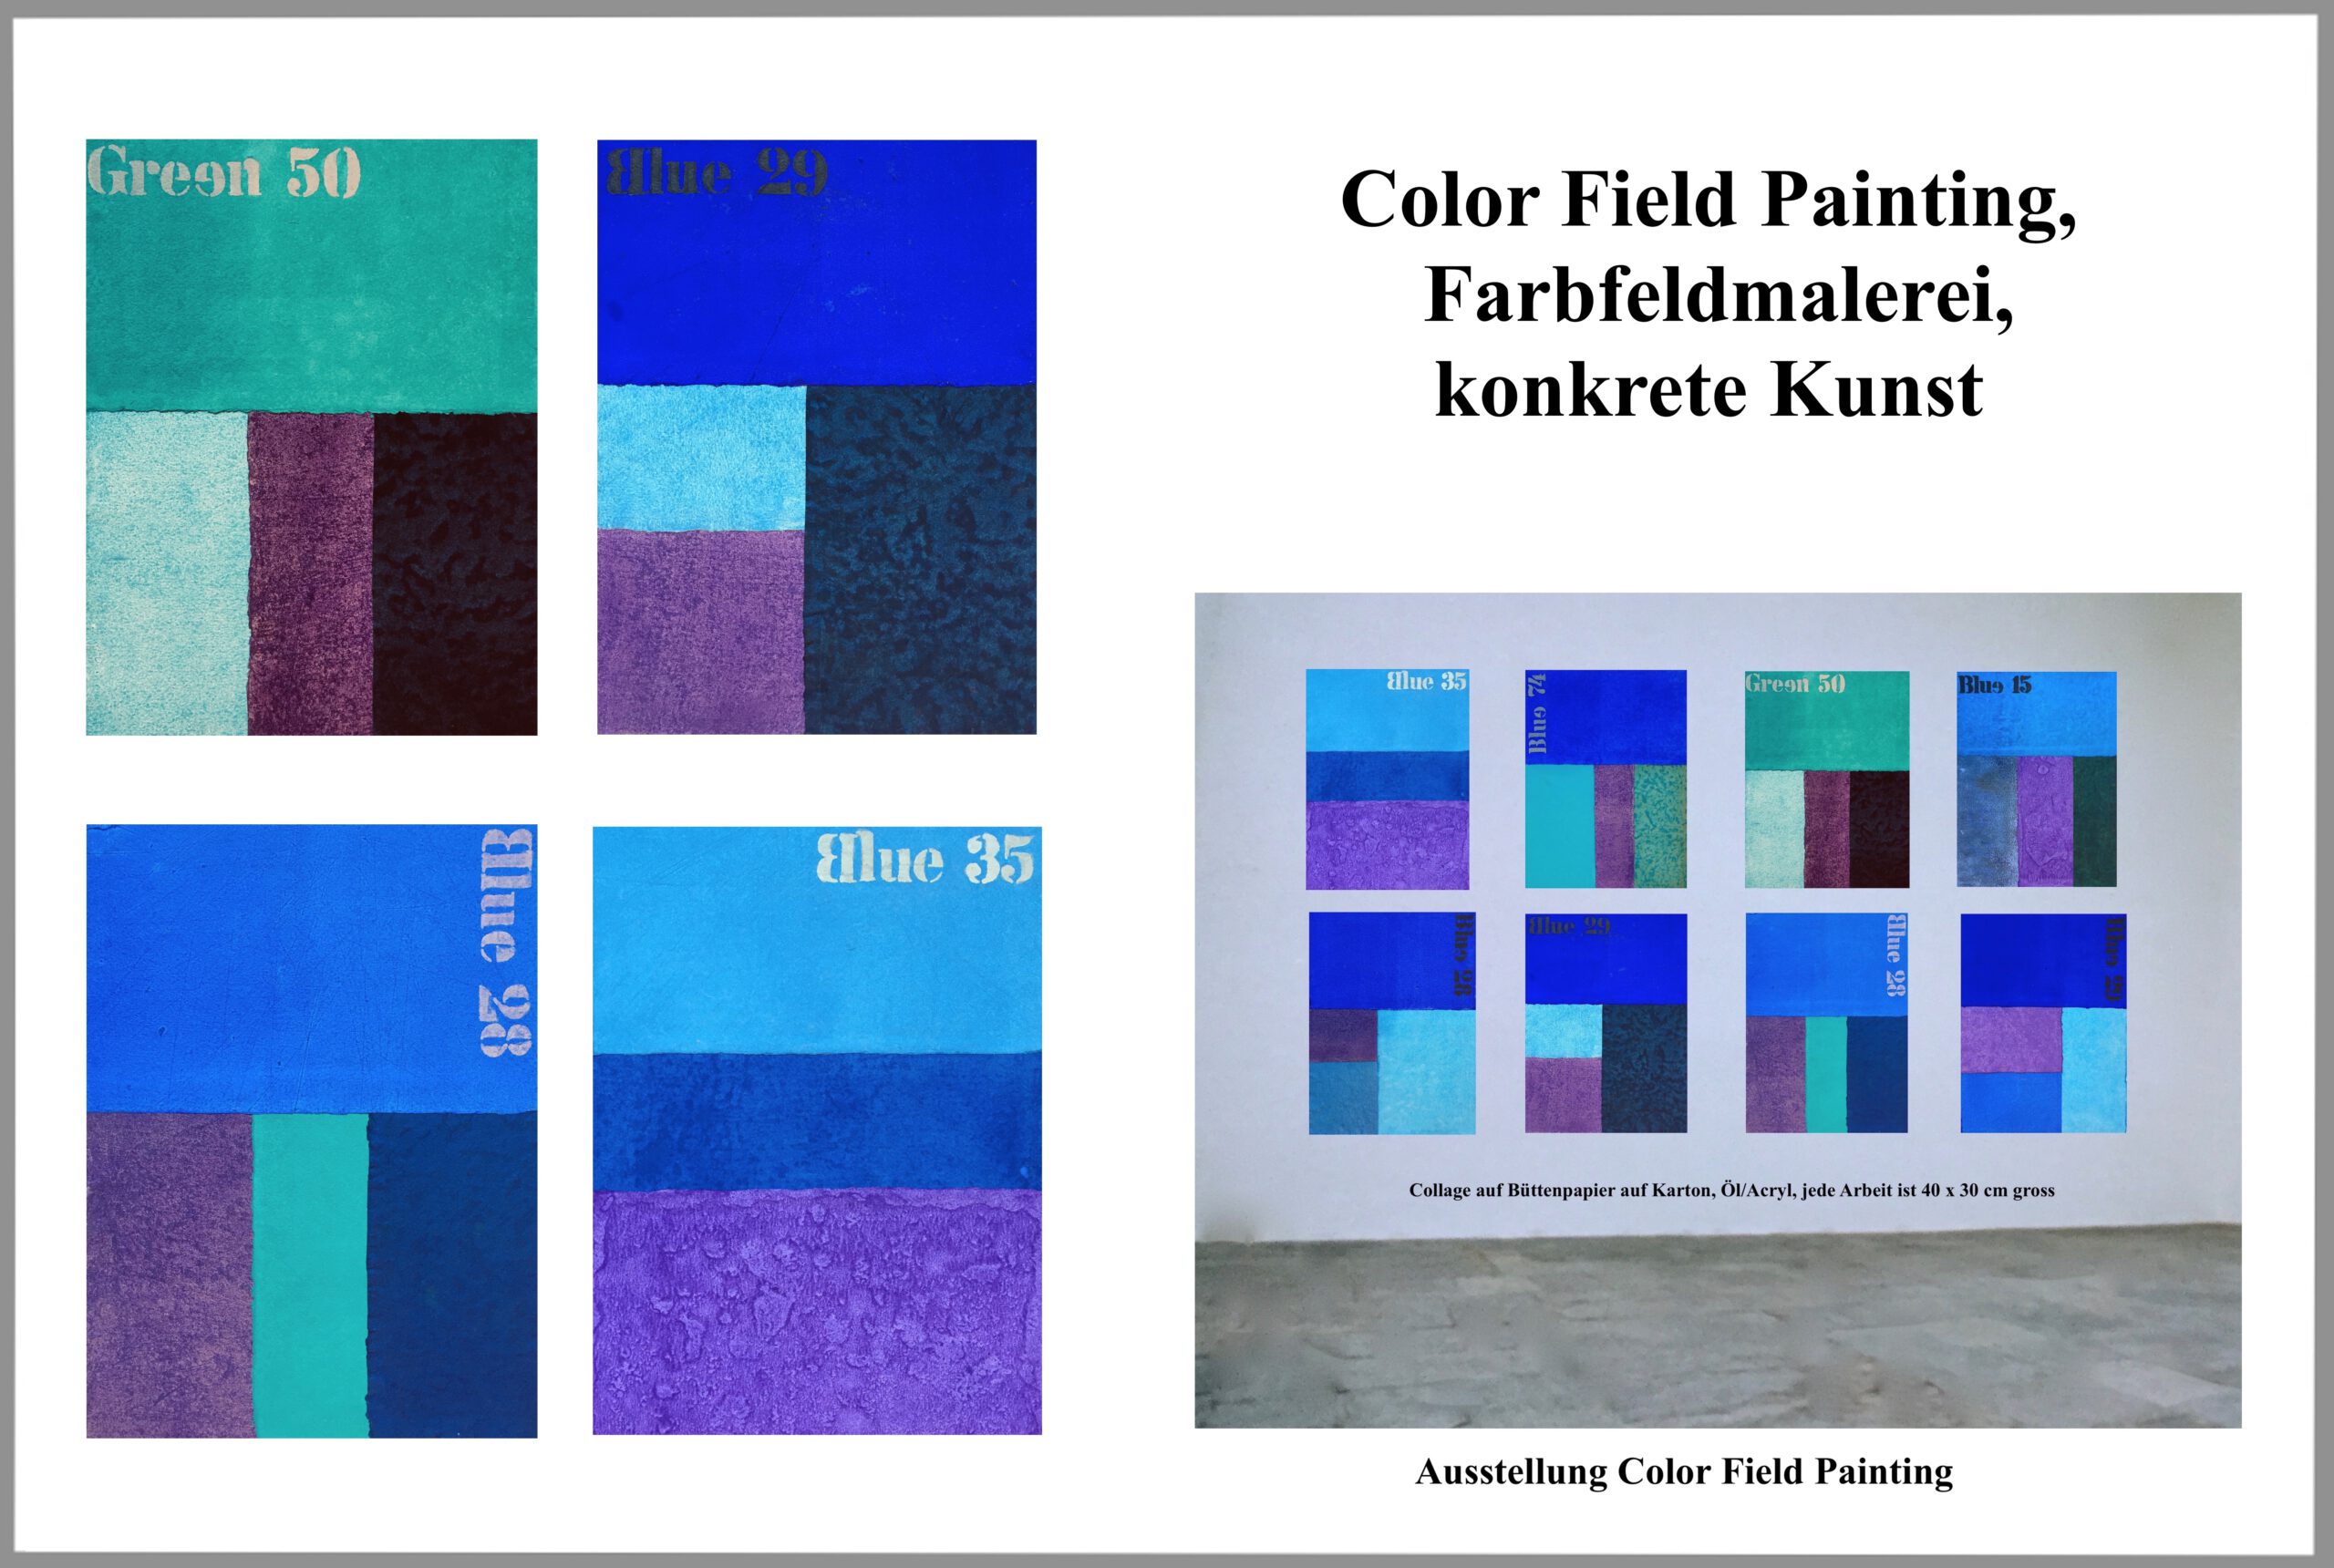 Color Field Painting, konkrete Kunst, Farbfeldmalerei